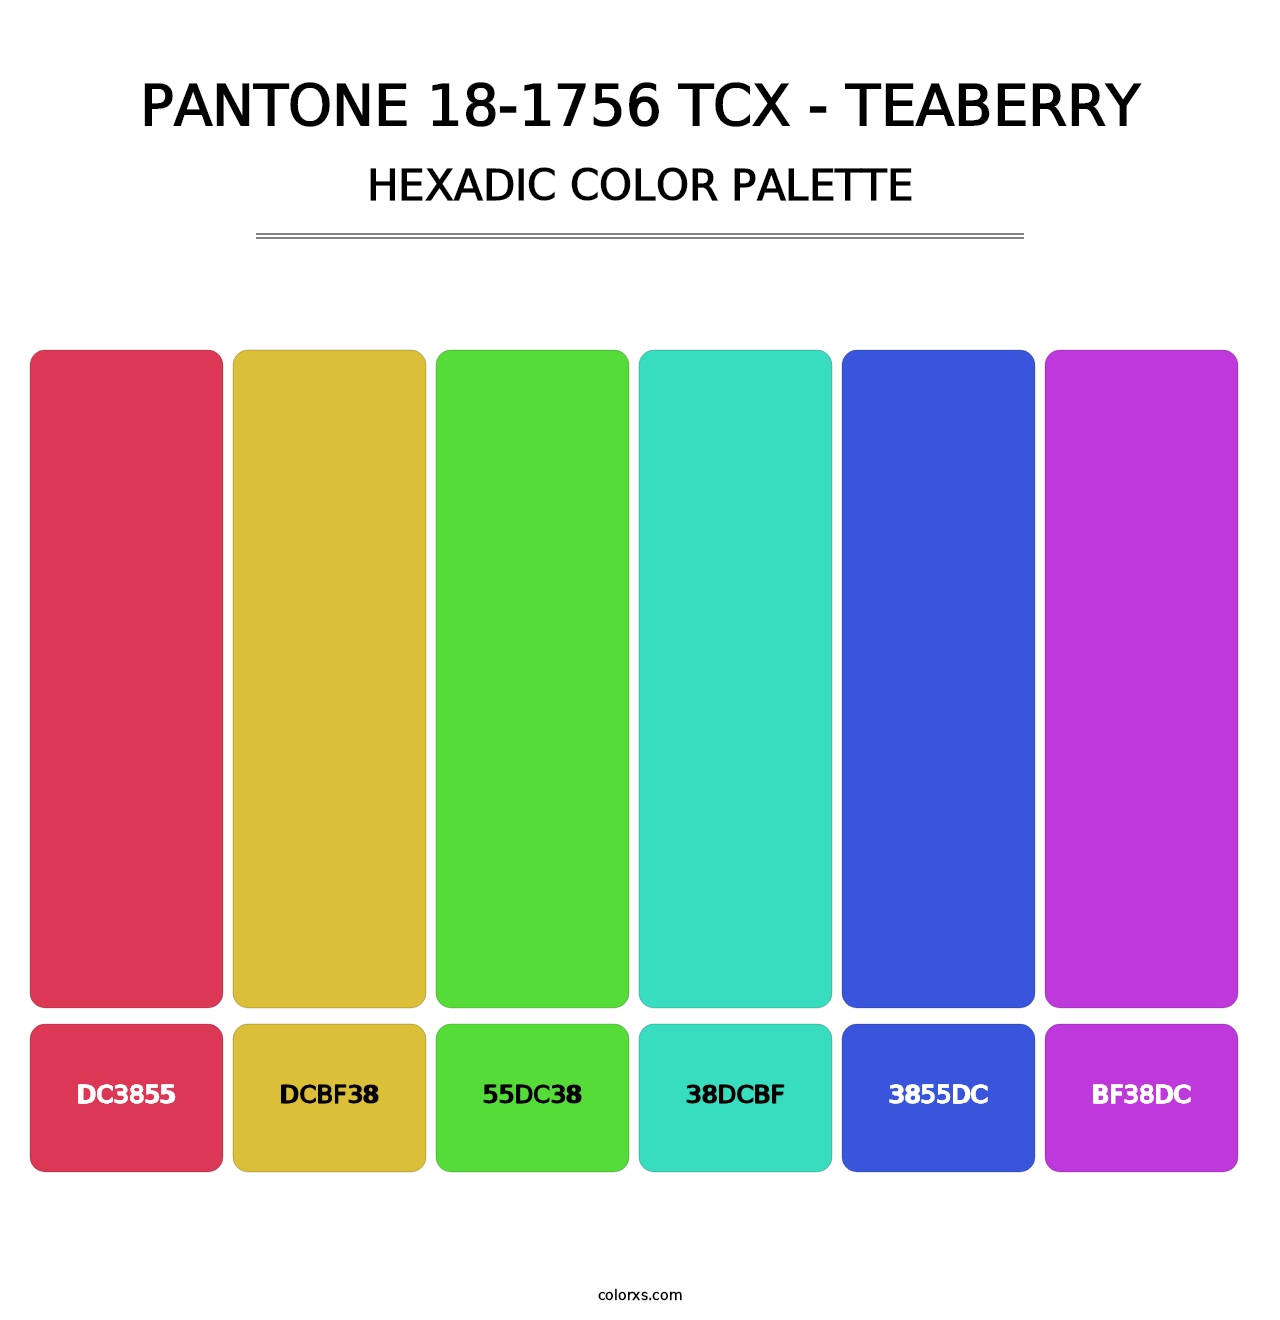 PANTONE 18-1756 TCX - Teaberry - Hexadic Color Palette